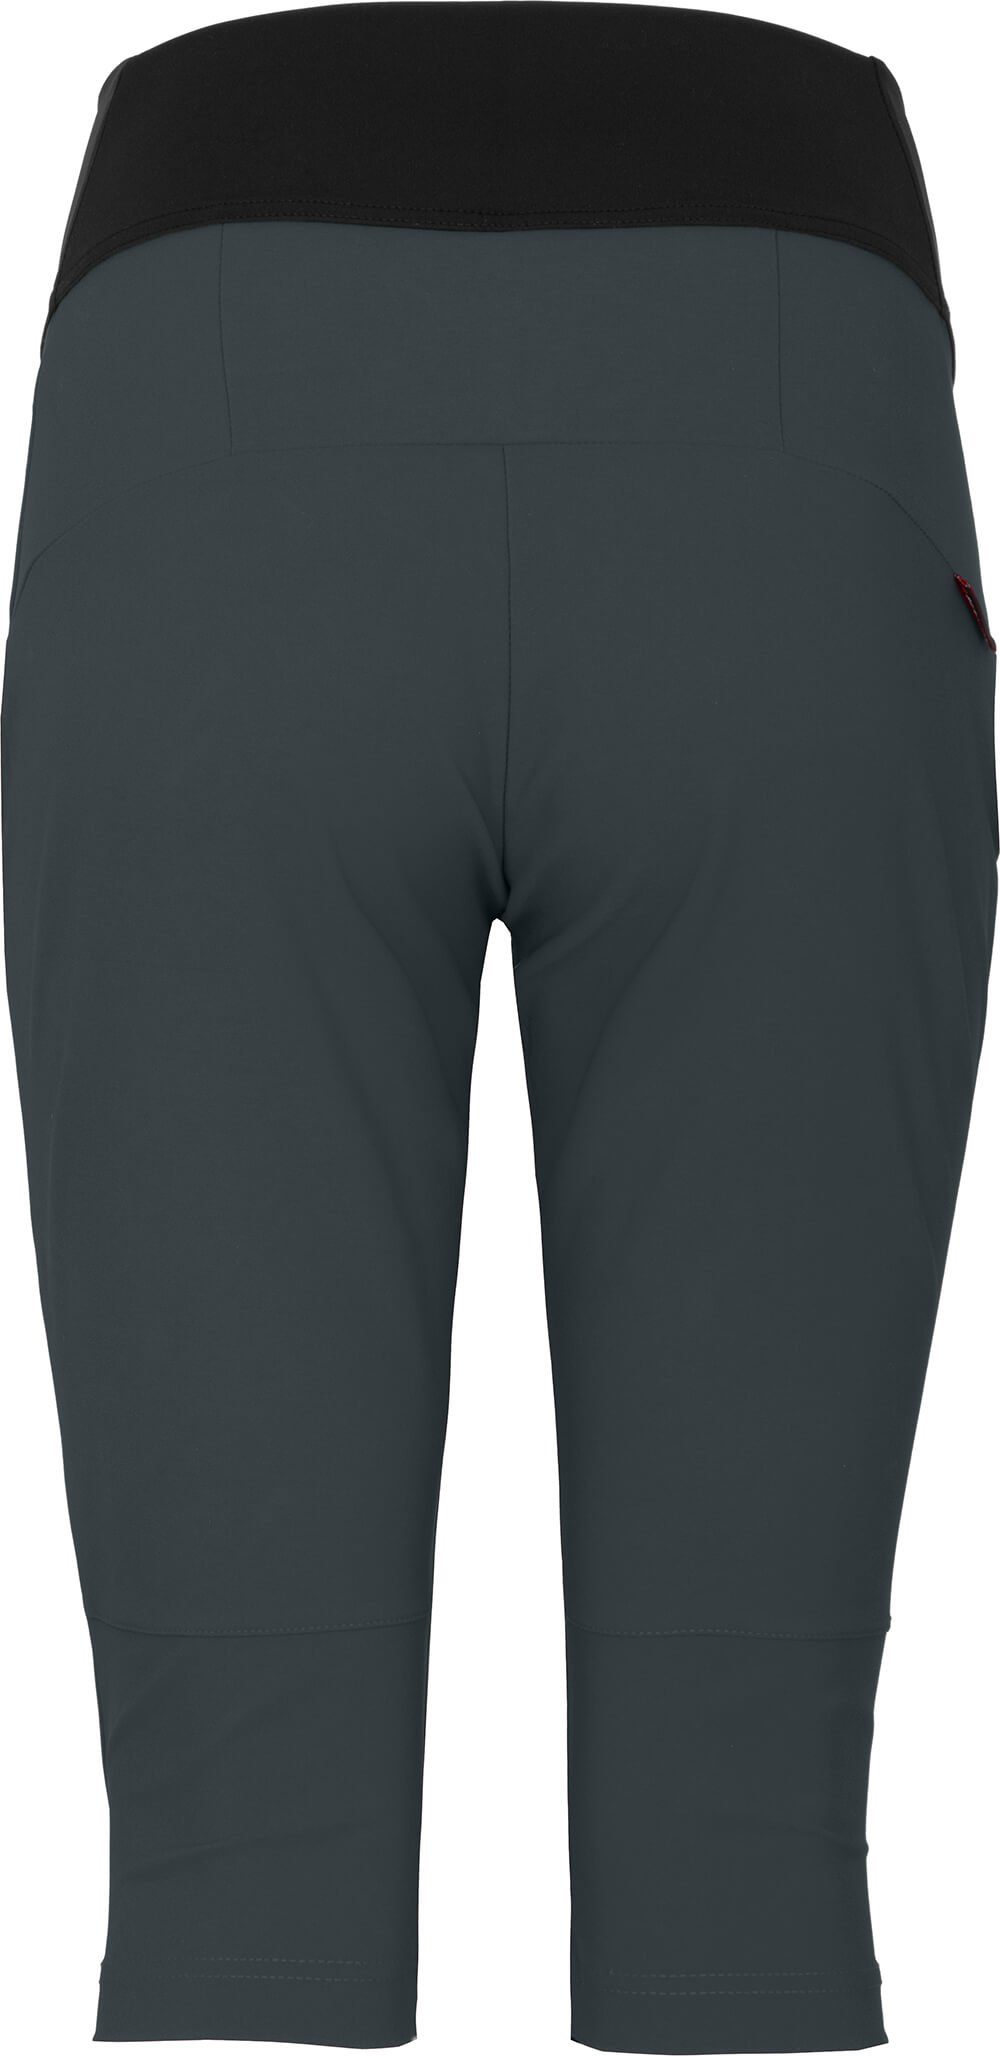 Bergson dunkel TIKEN Leggings, grau elastisch, Normalgrößen, 3/4 schnelltrocknend, Damen (tight) Outdoor Outdoorhose Capri